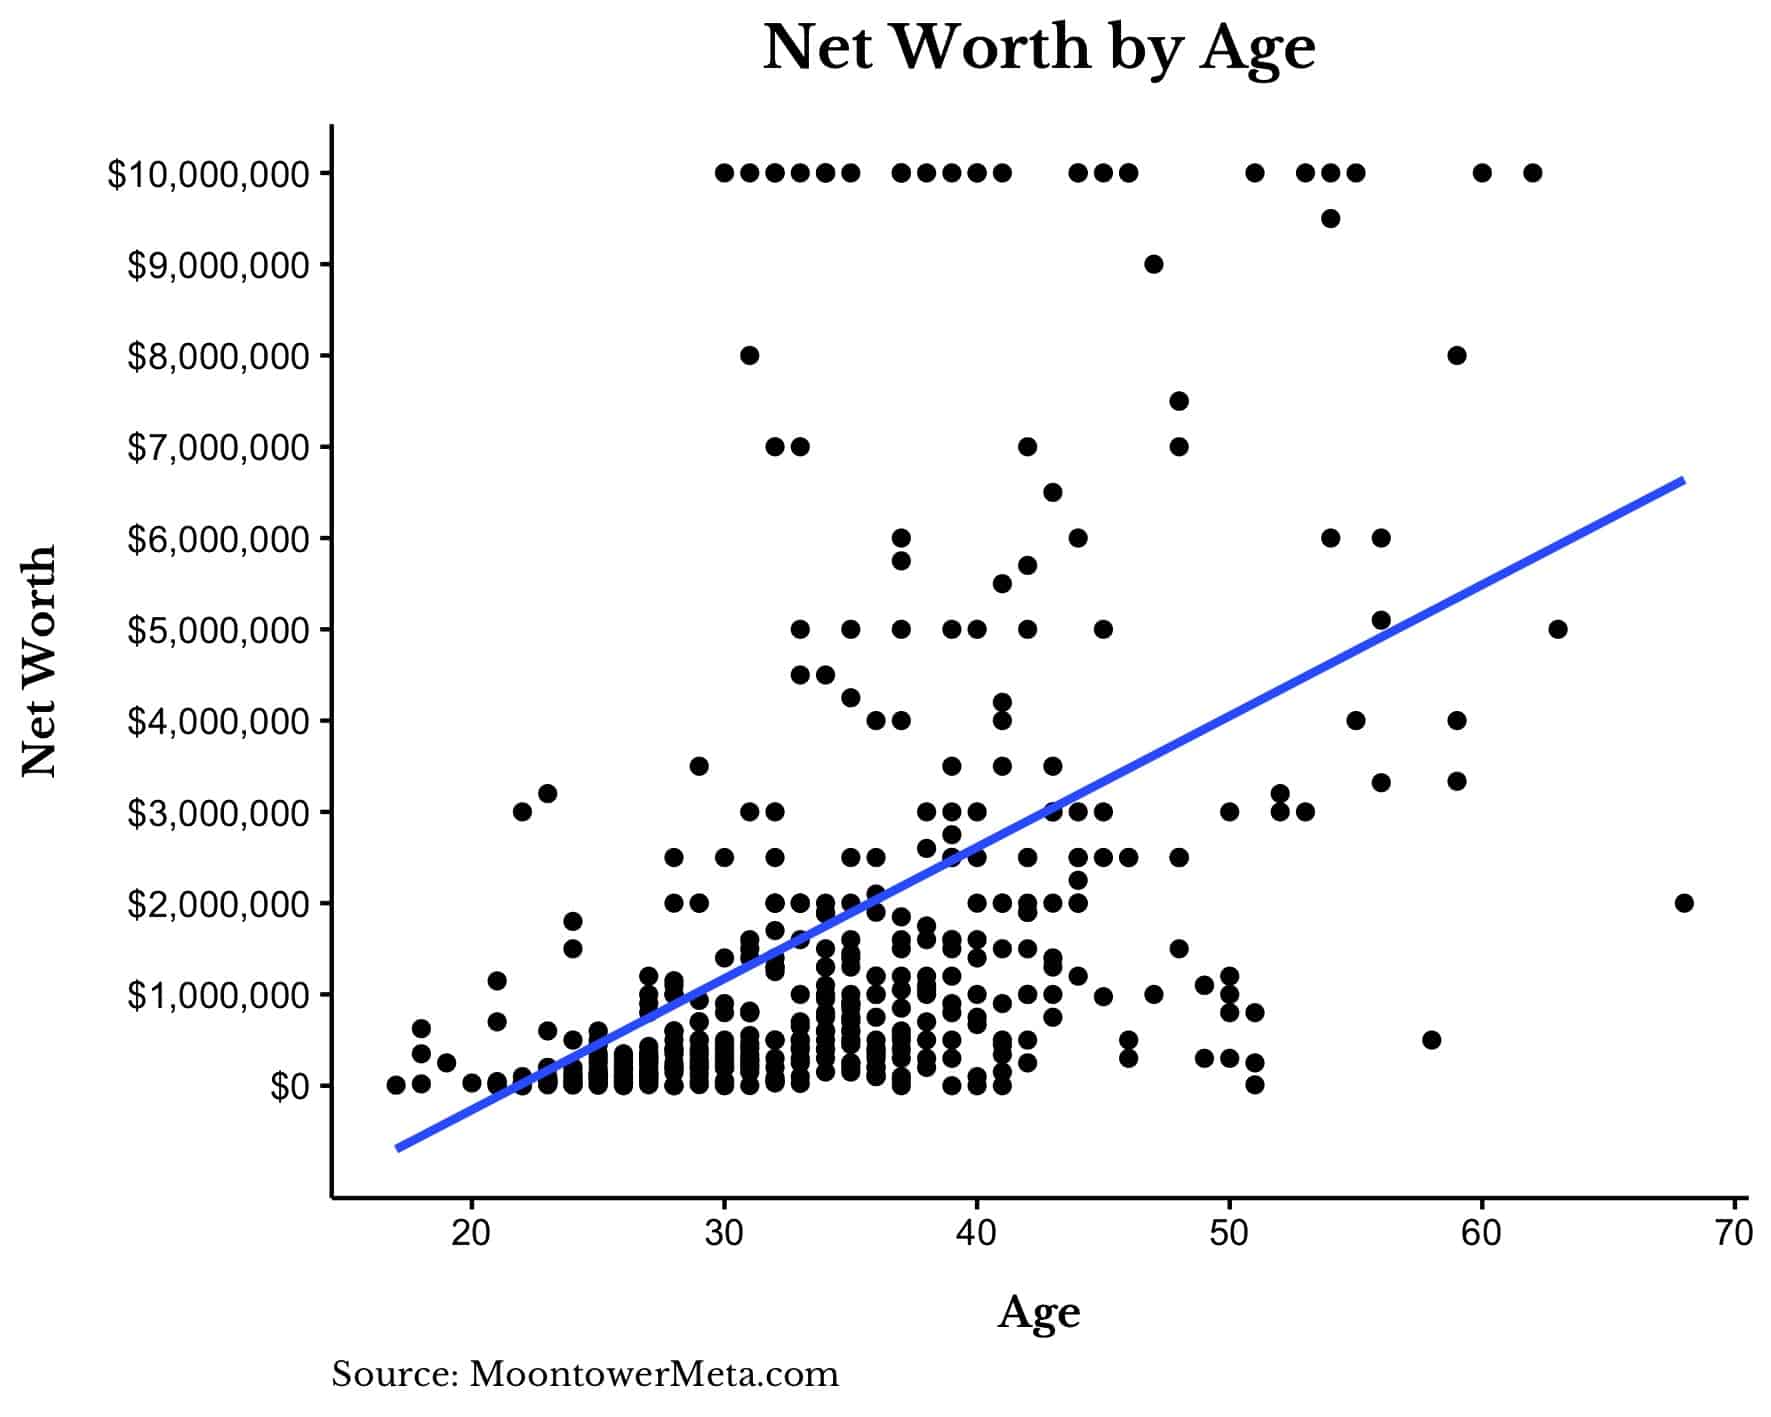 Net worth by age plot from MoontowerMeta.com survey